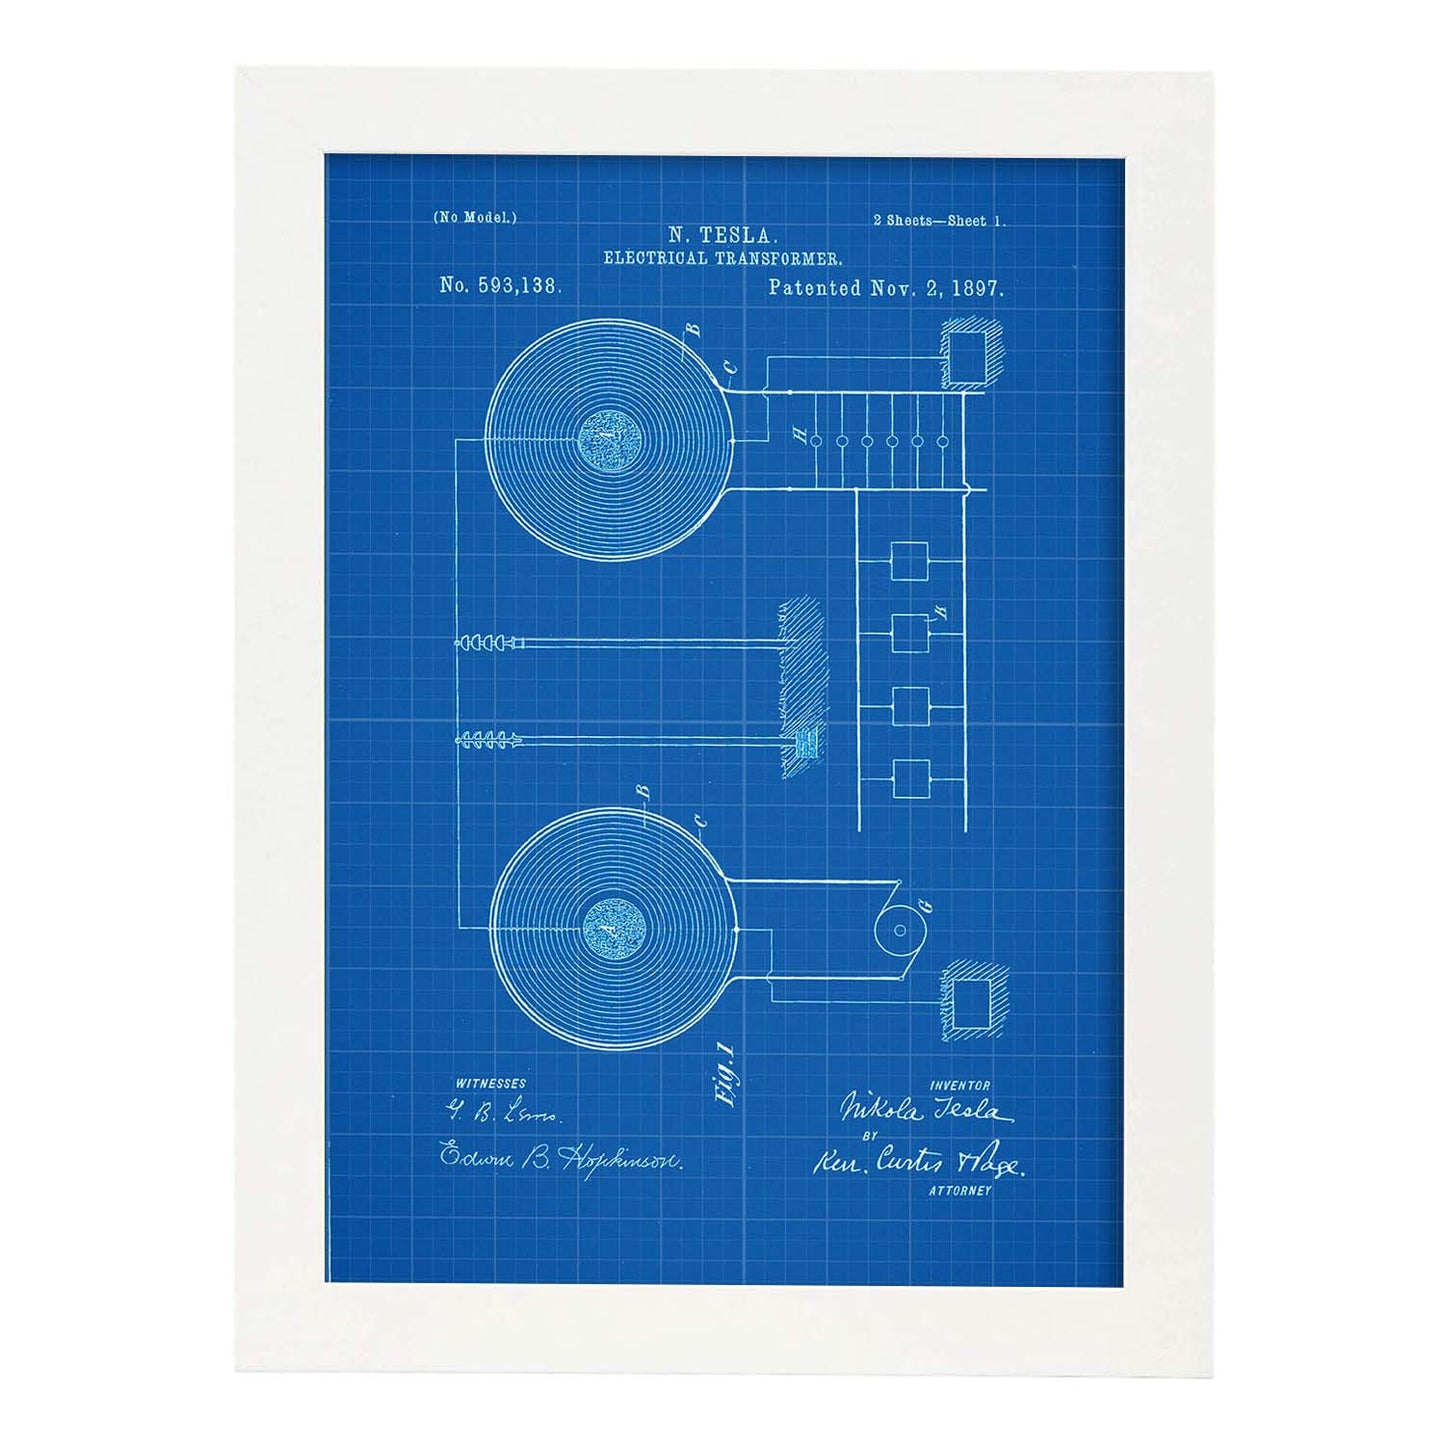 Poster con patente de Transformador electrico. Lámina con diseño de patente antigua-Artwork-Nacnic-A3-Marco Blanco-Nacnic Estudio SL